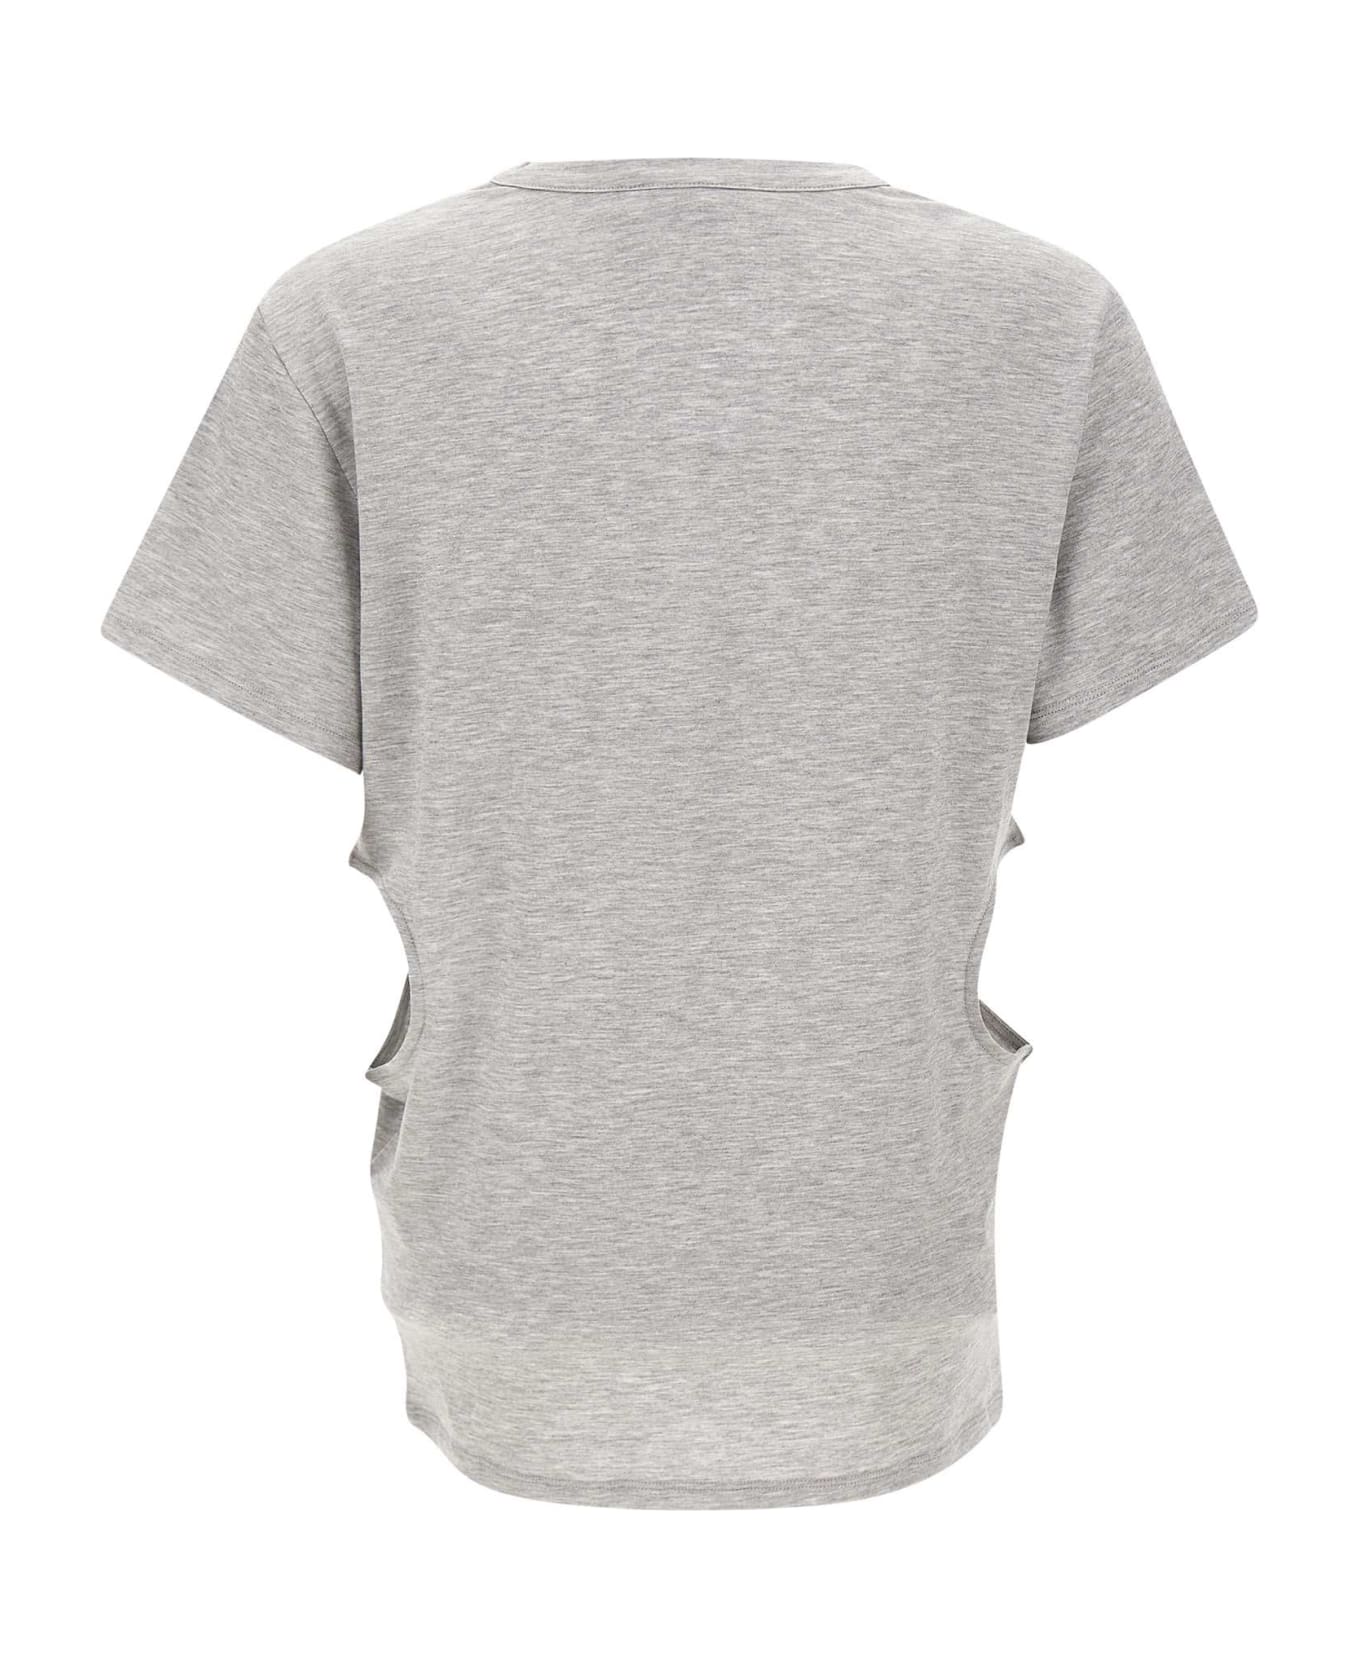 IRO "bonnie" T-shirt - GREY Tシャツ